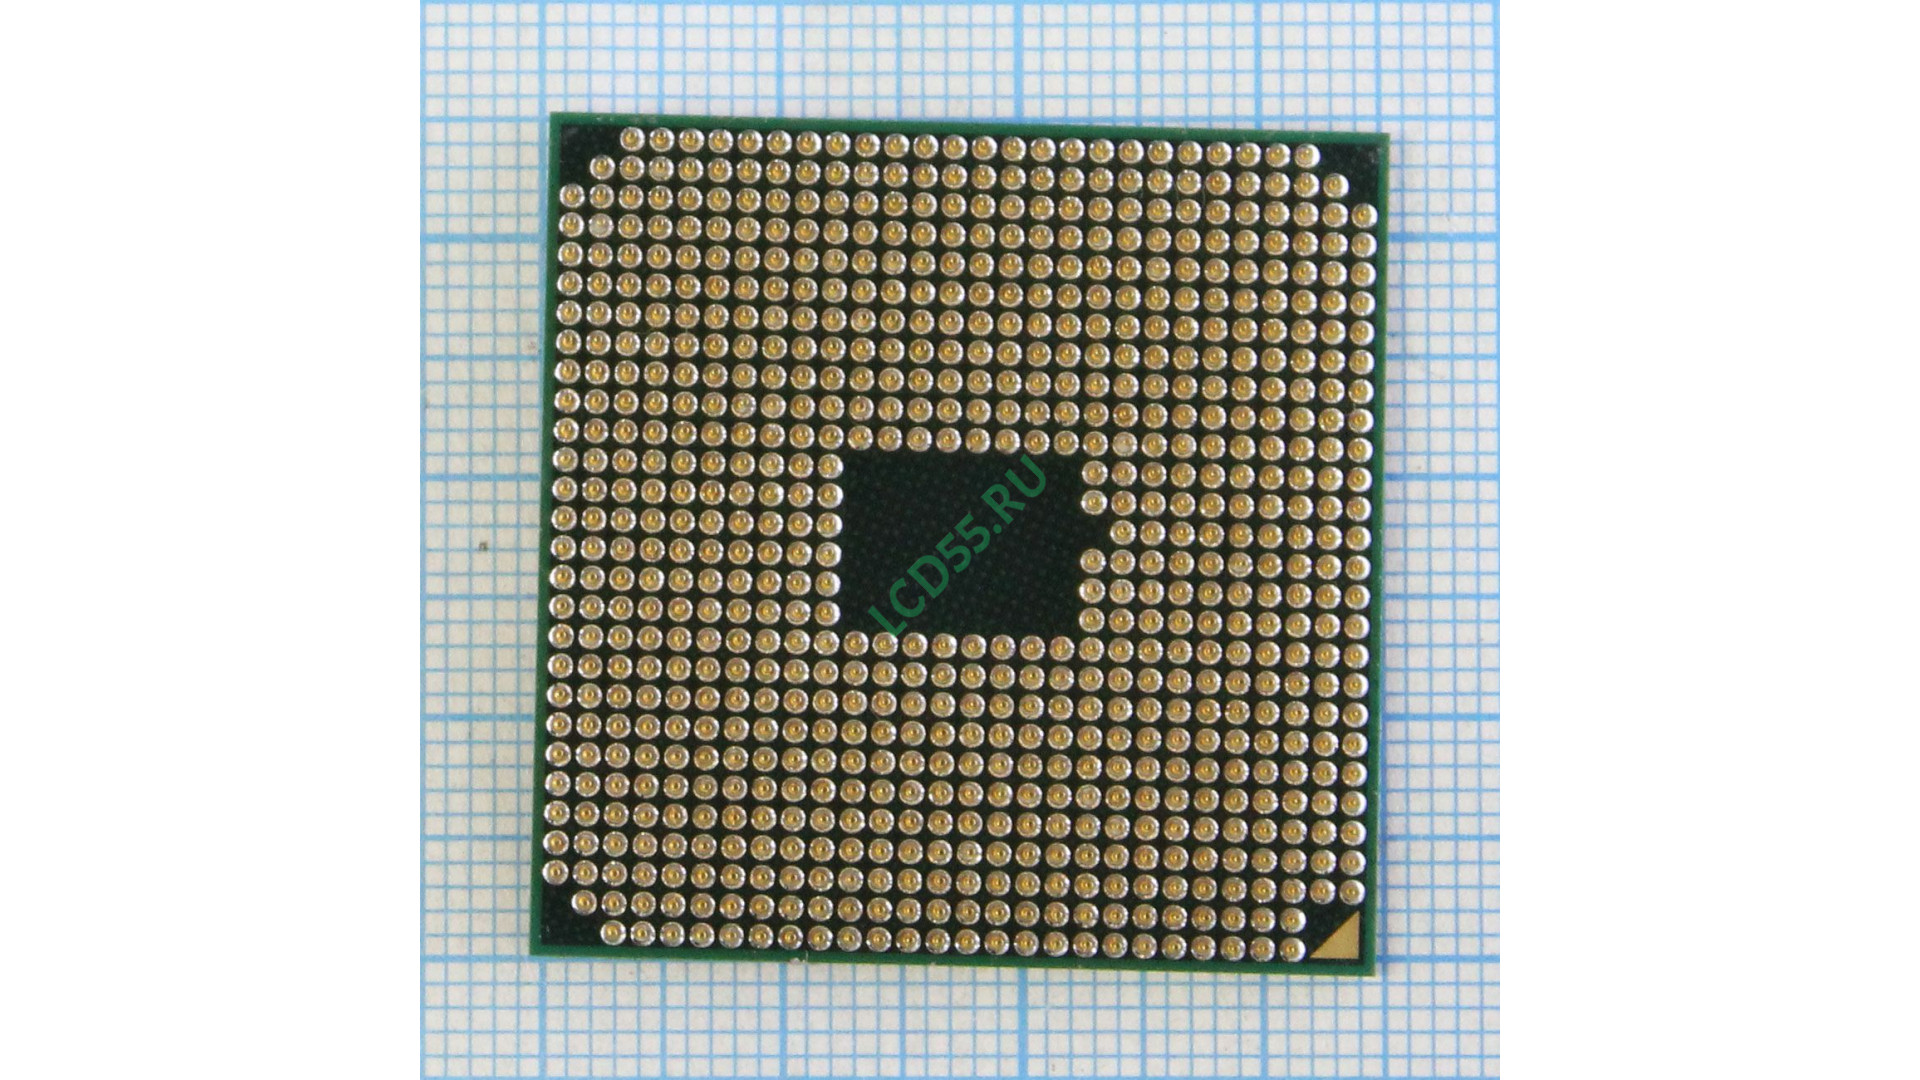 Процессор AMD A10-4600M AM4600DEC44HJ 2300 MHz 4 Core Socket SR1r2